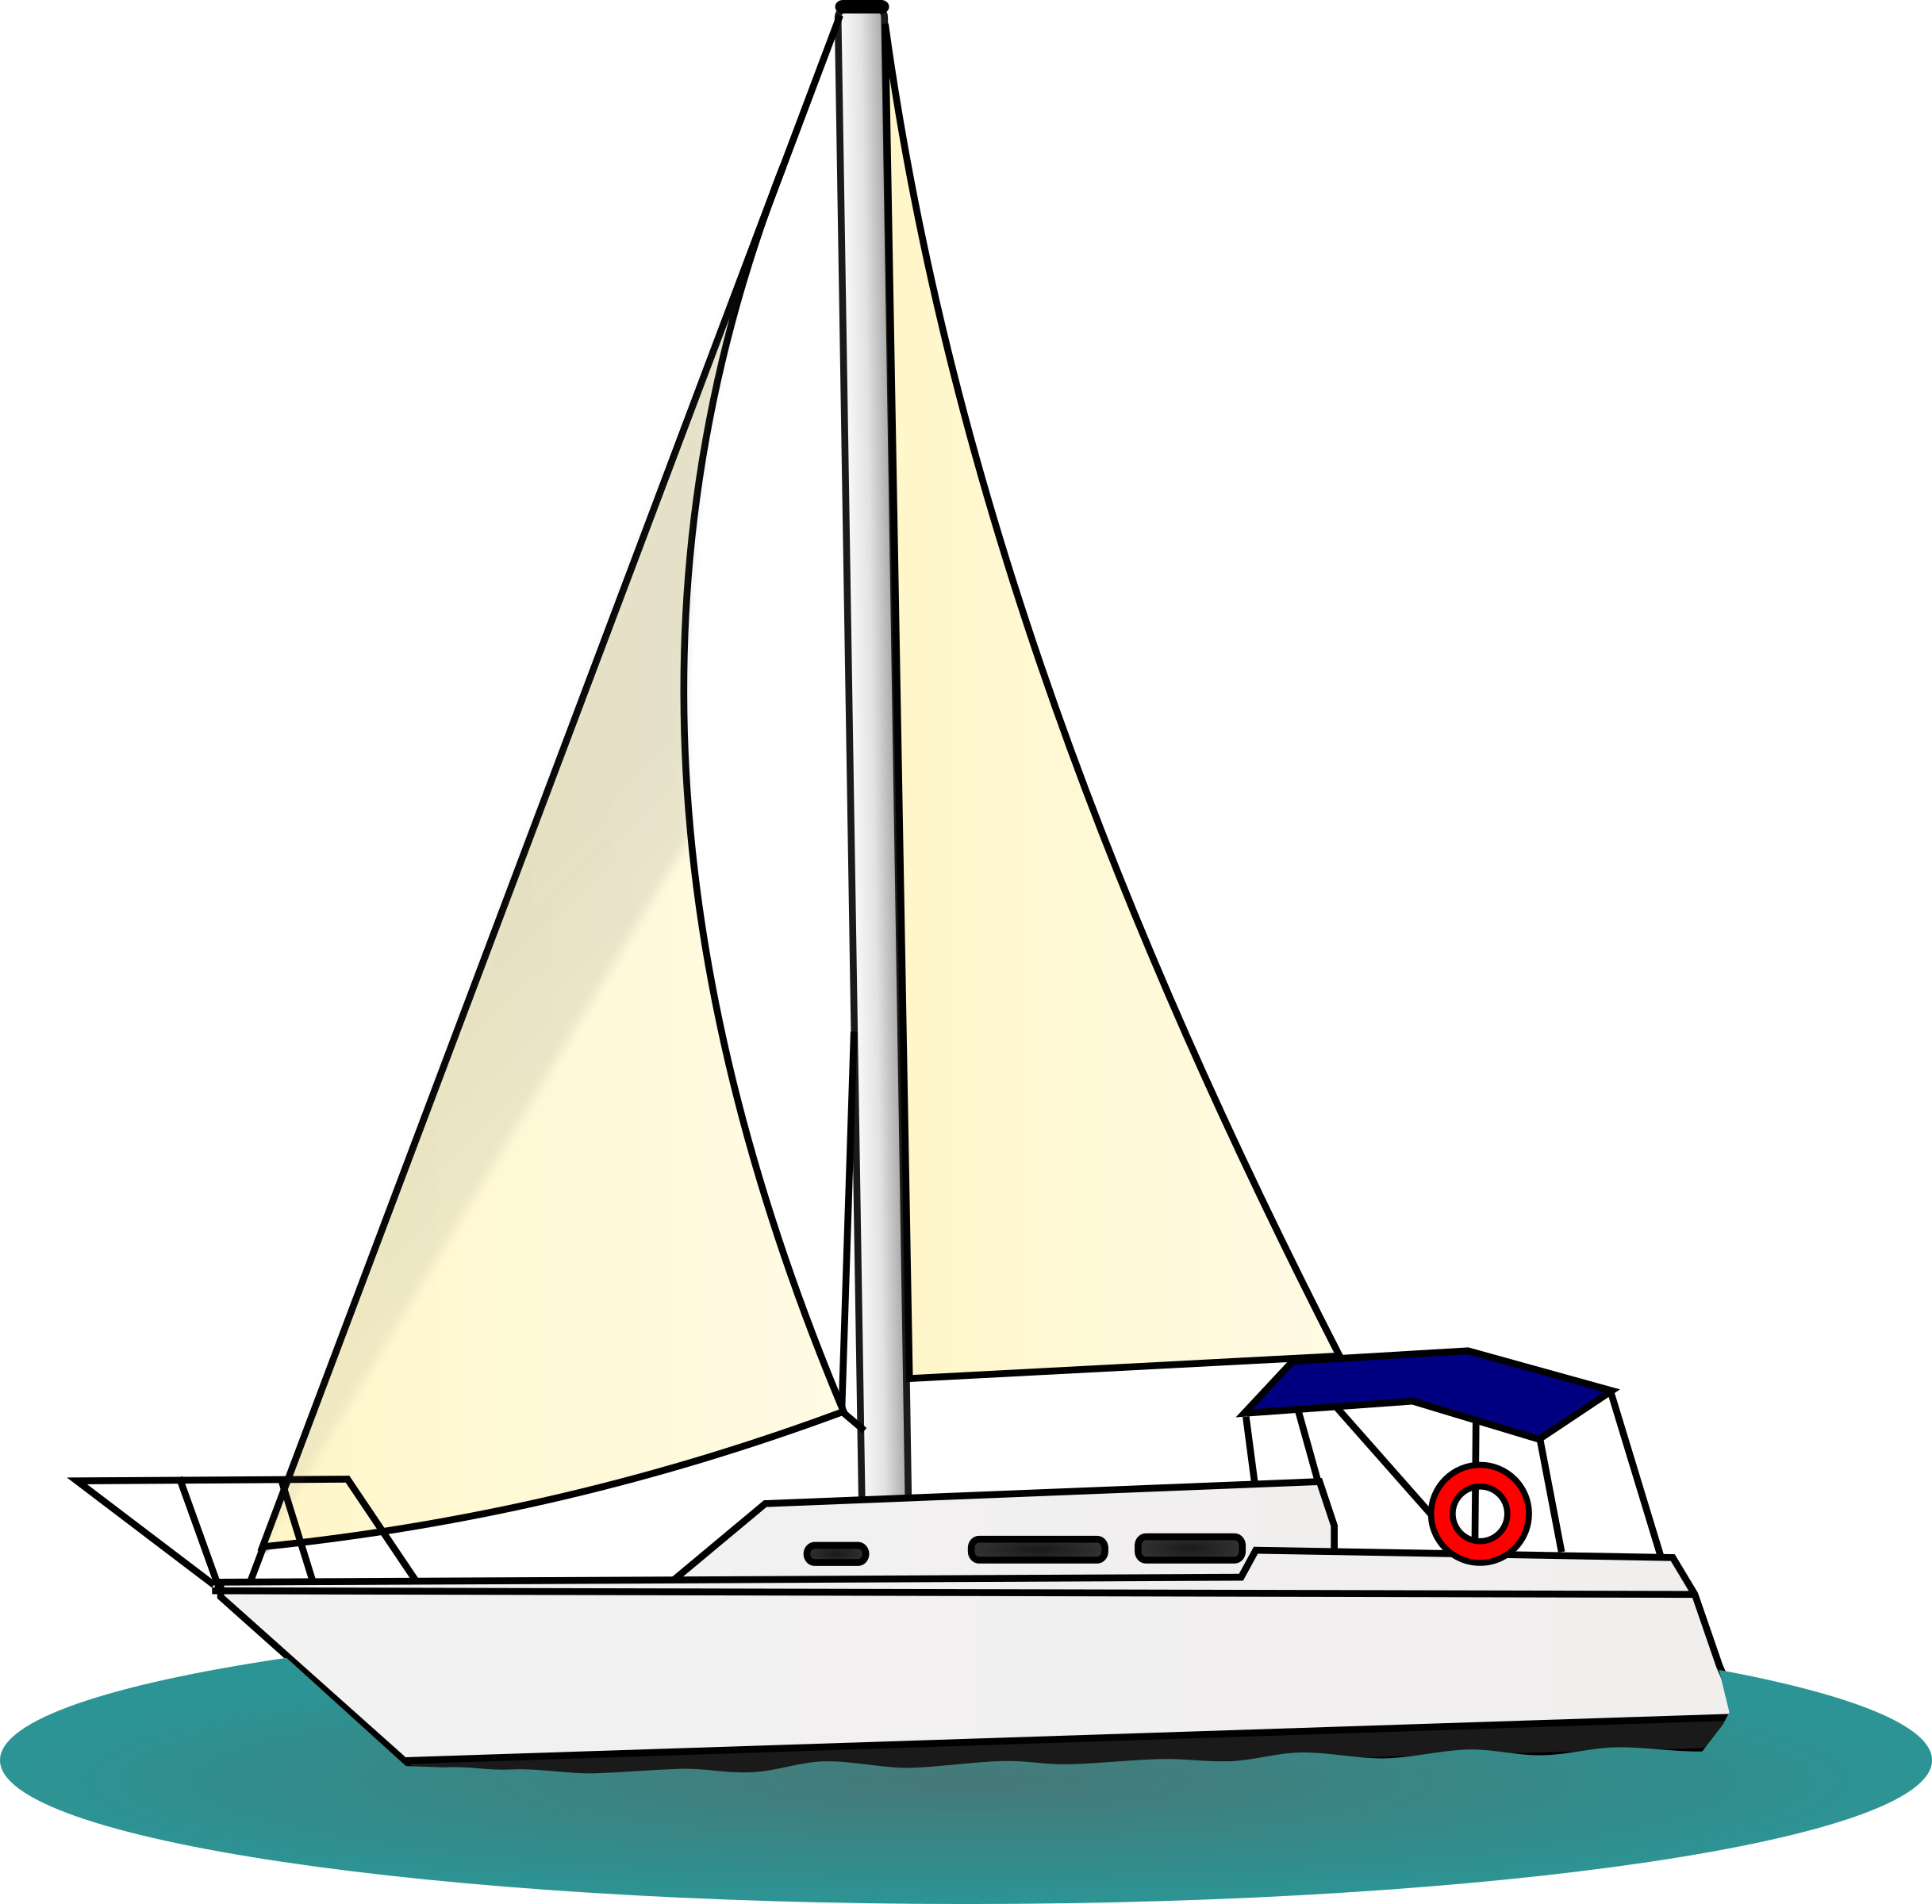 Sailing Yacht Illustration.png